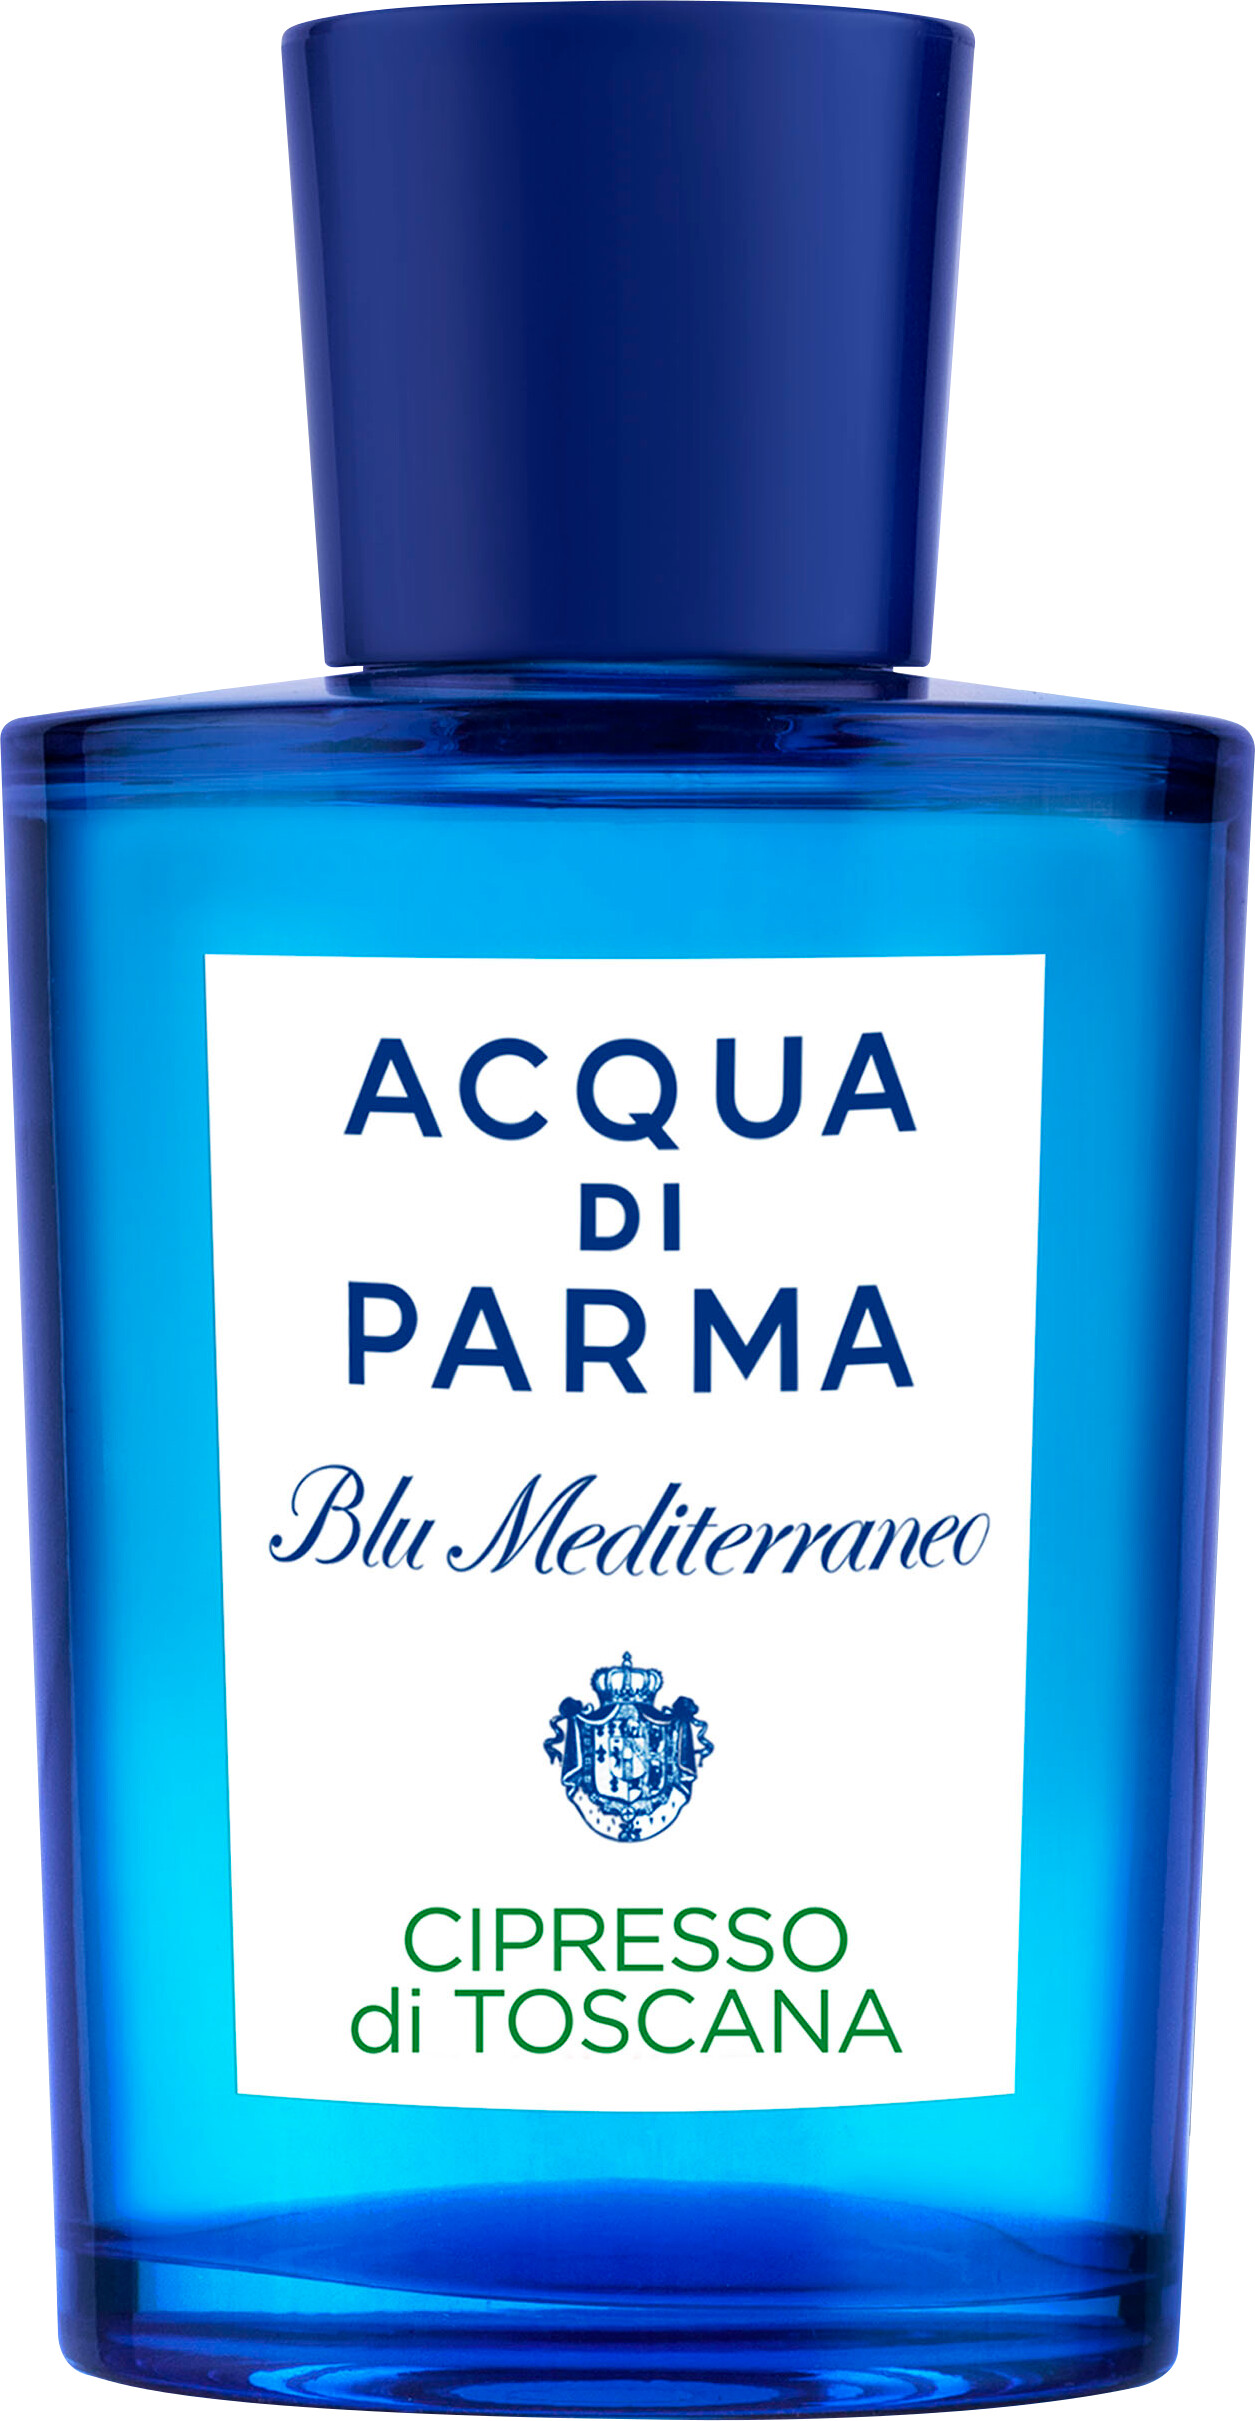 Acqua Di Parma Blu Mediterraneo Cipresso di Toscana